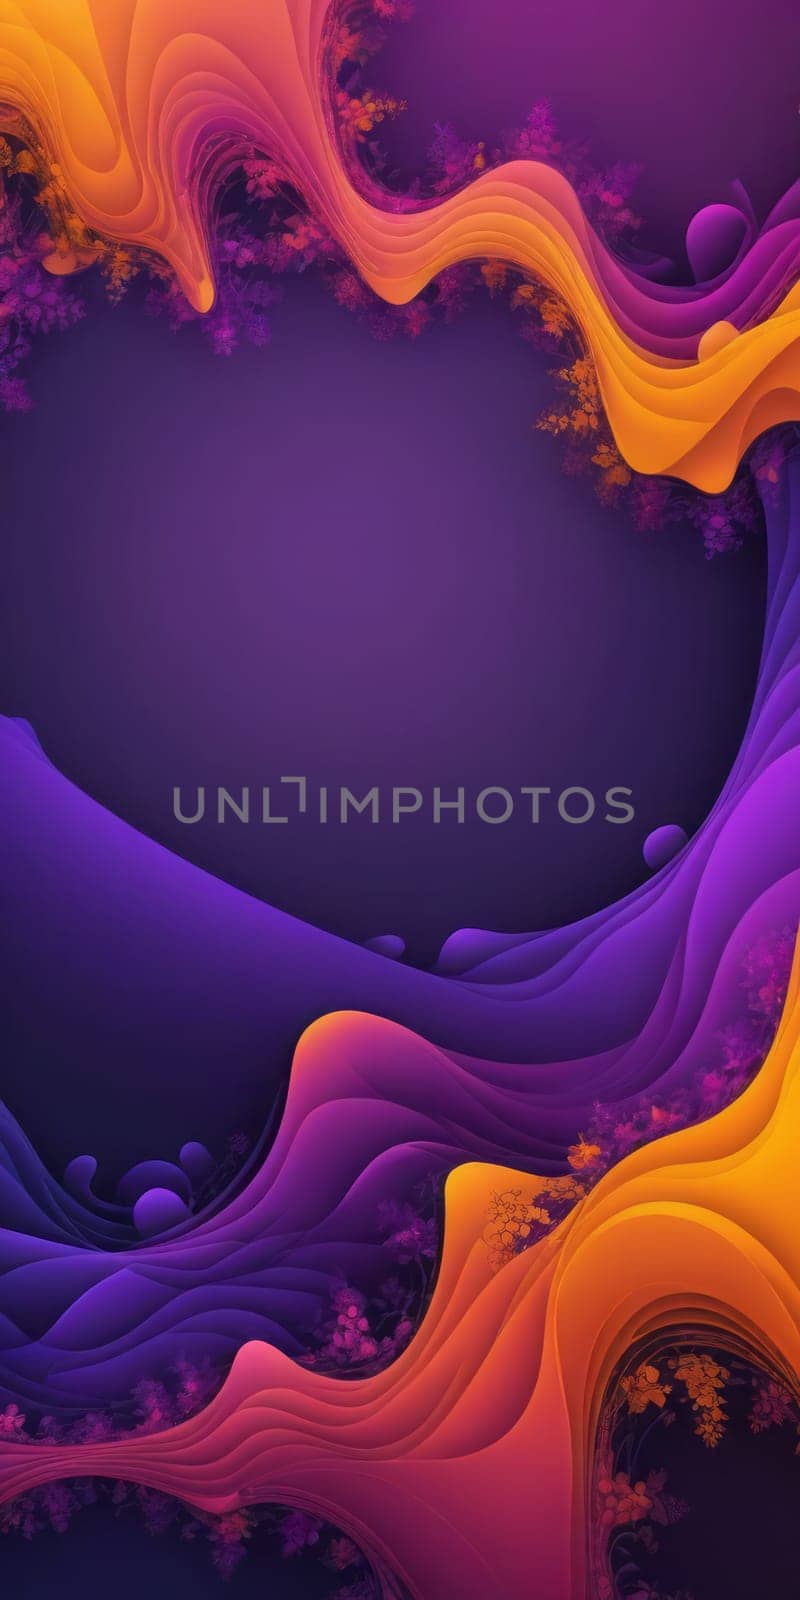 Fractal Shapes in Purple Darkorange by nkotlyar